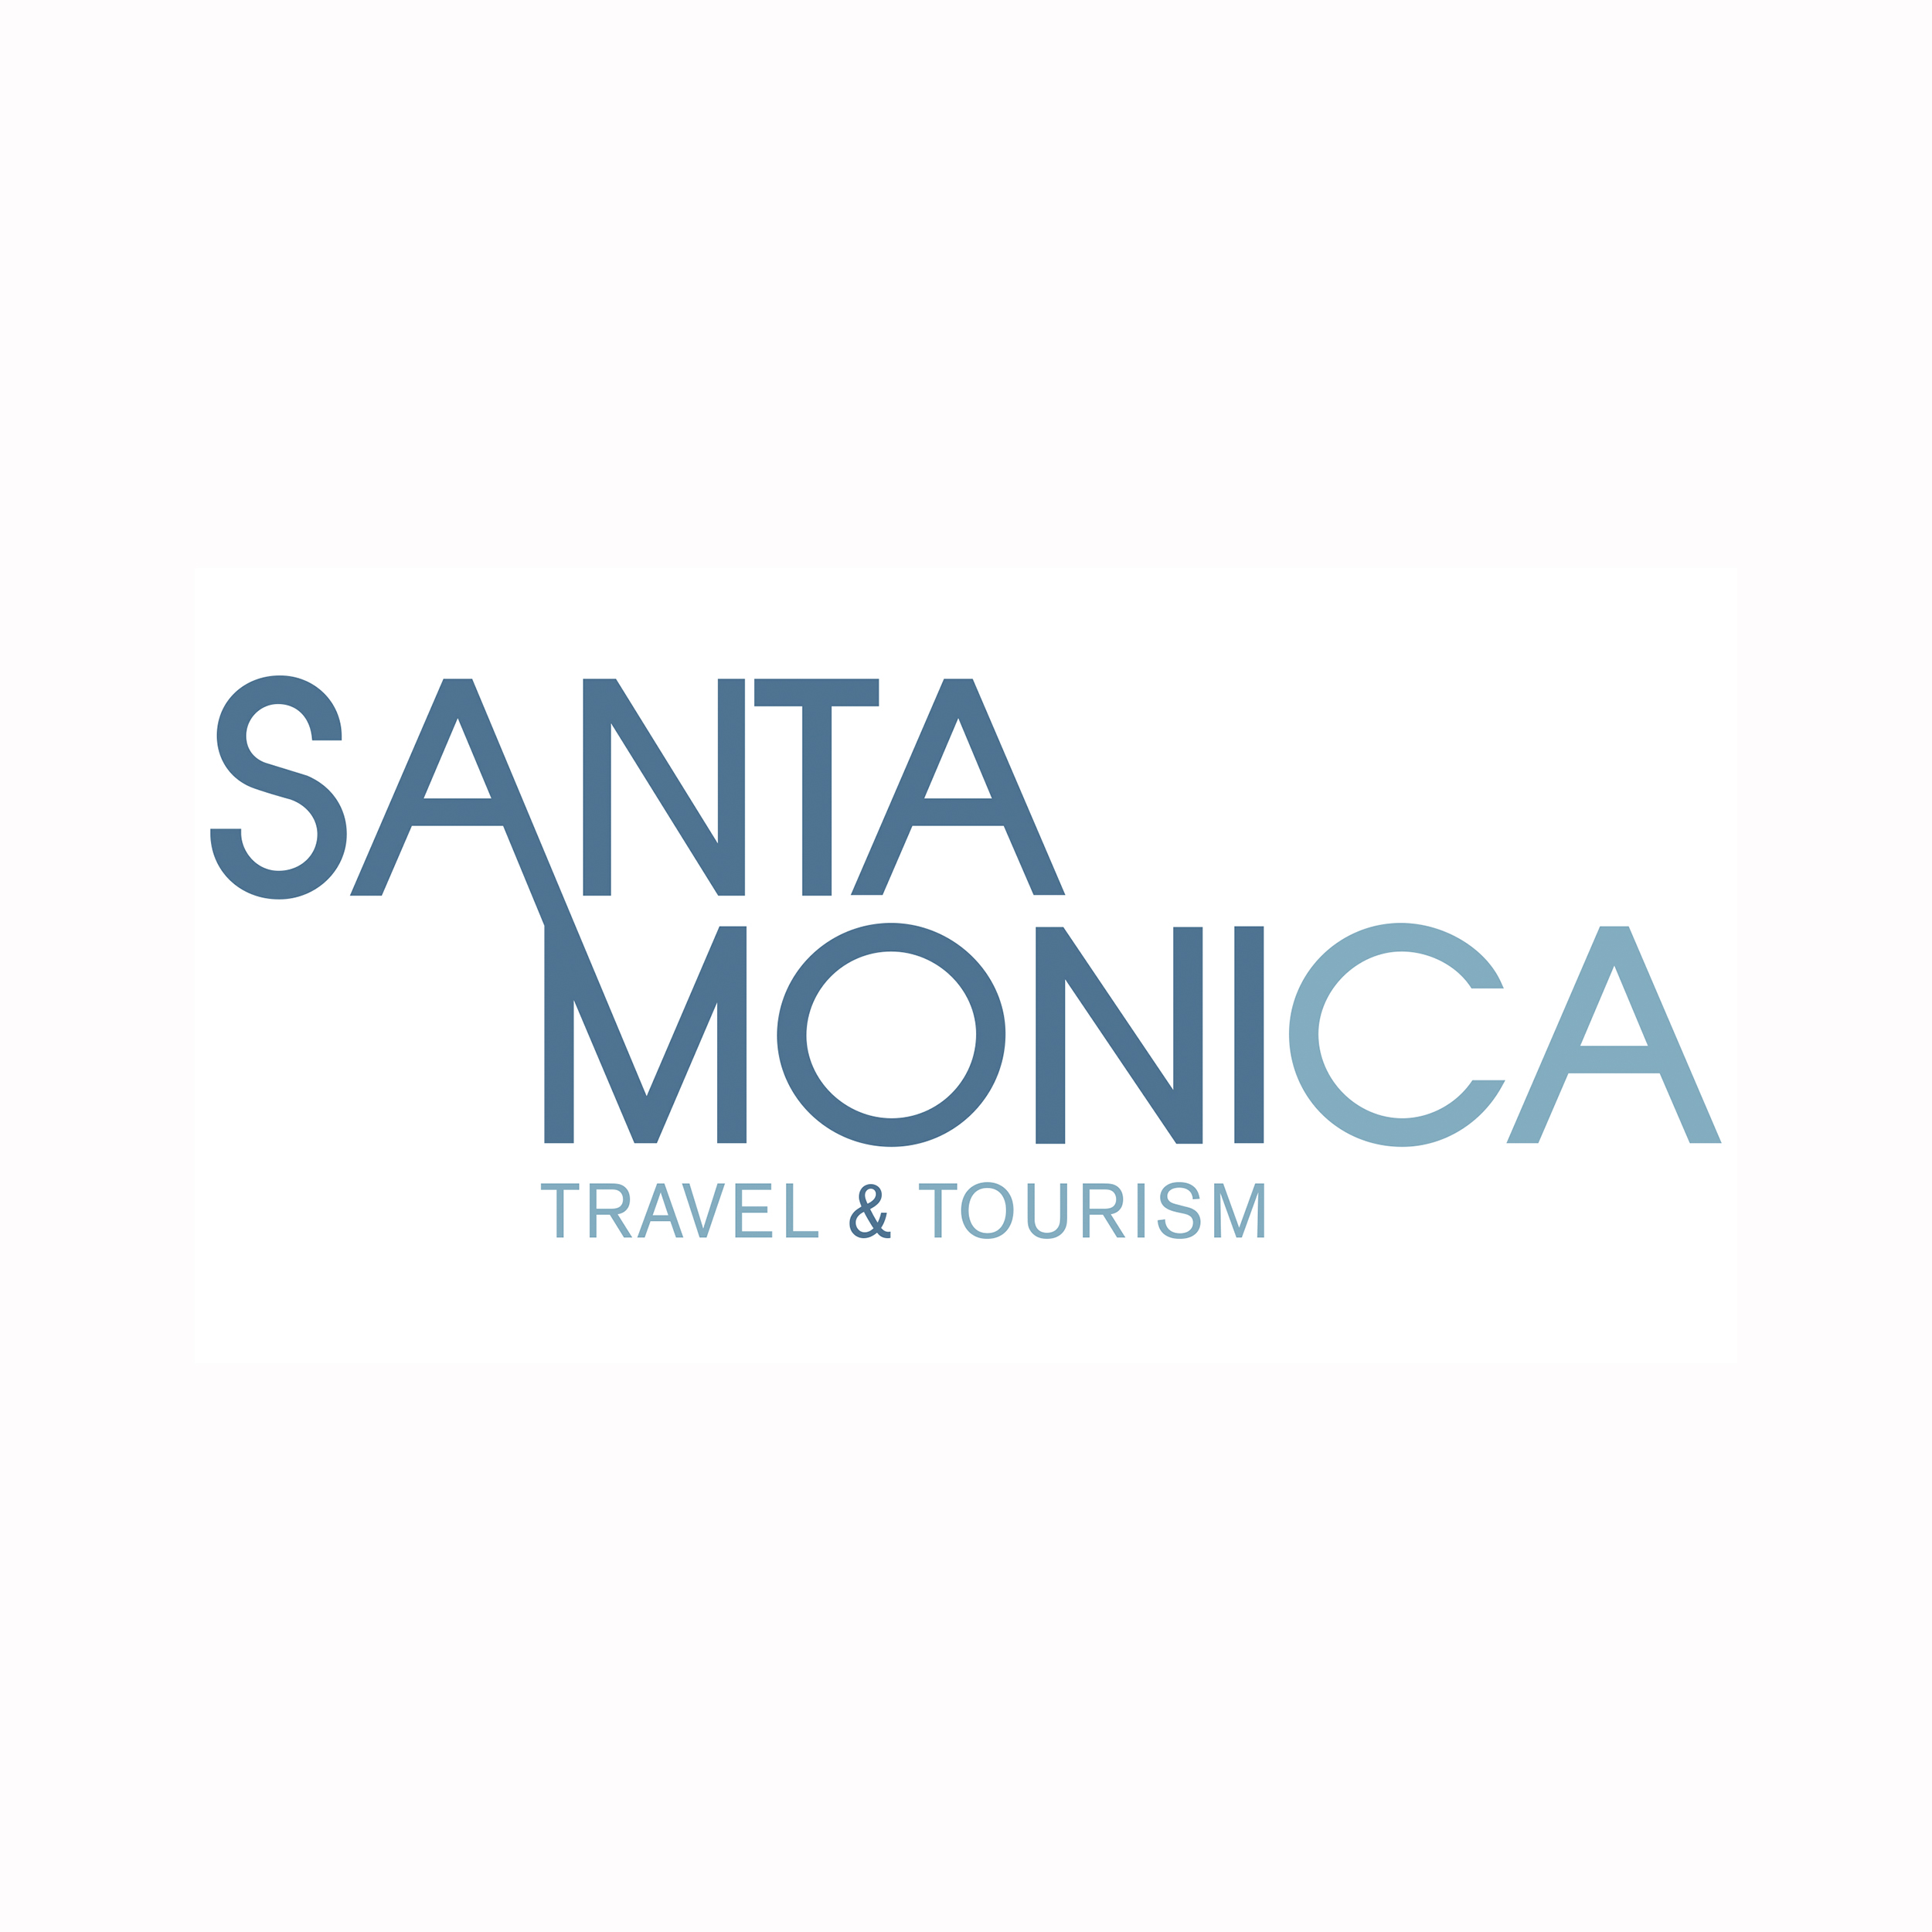 SANTA MONICA TOURISM TRAVEL.jpg